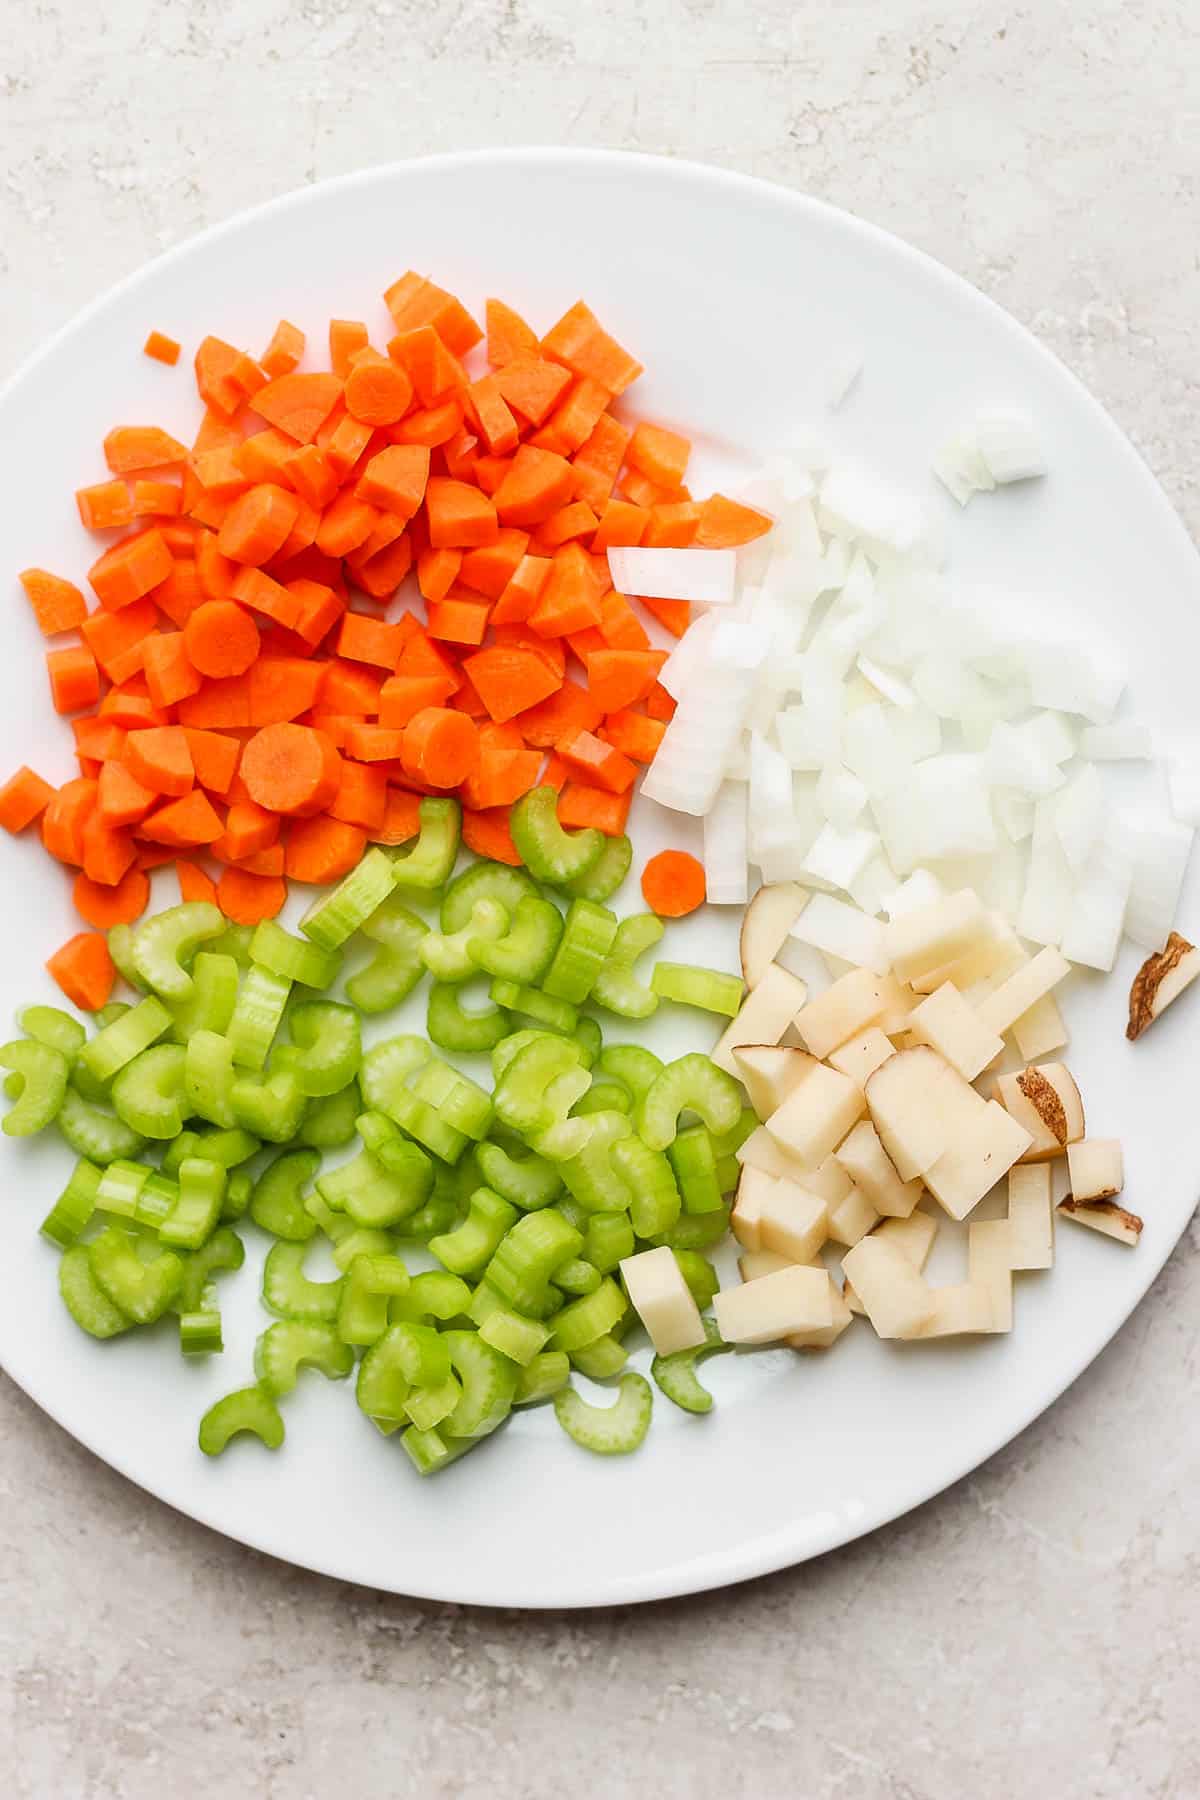 Chopped veggies on a white plate.